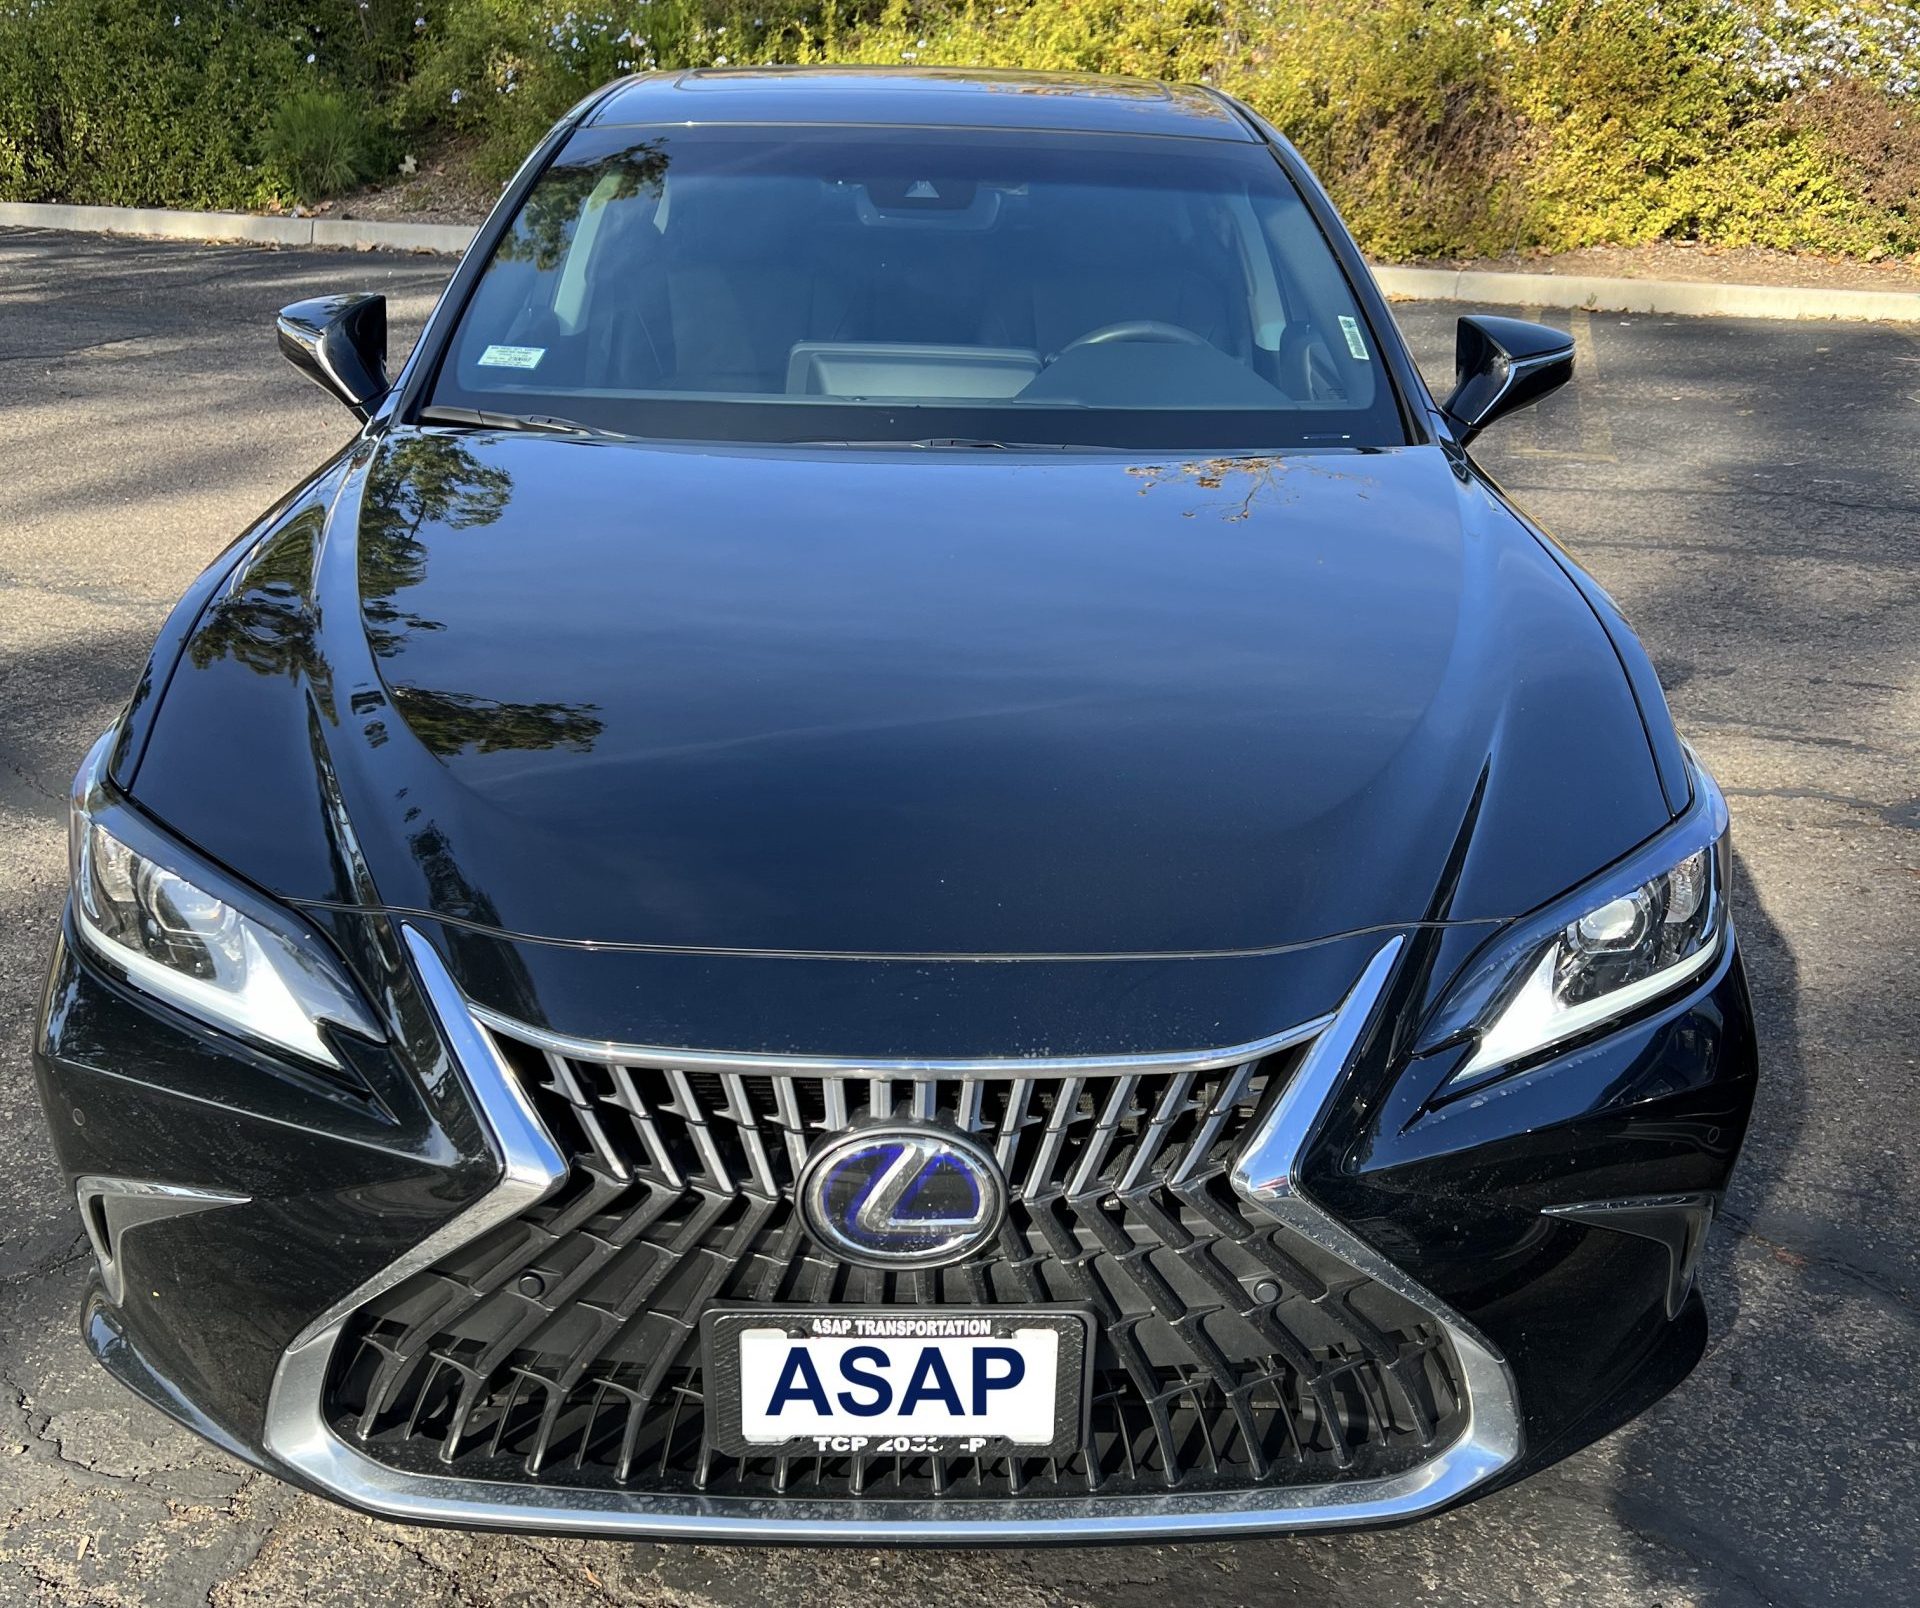 ASAP Transportation Luxury sedan front view